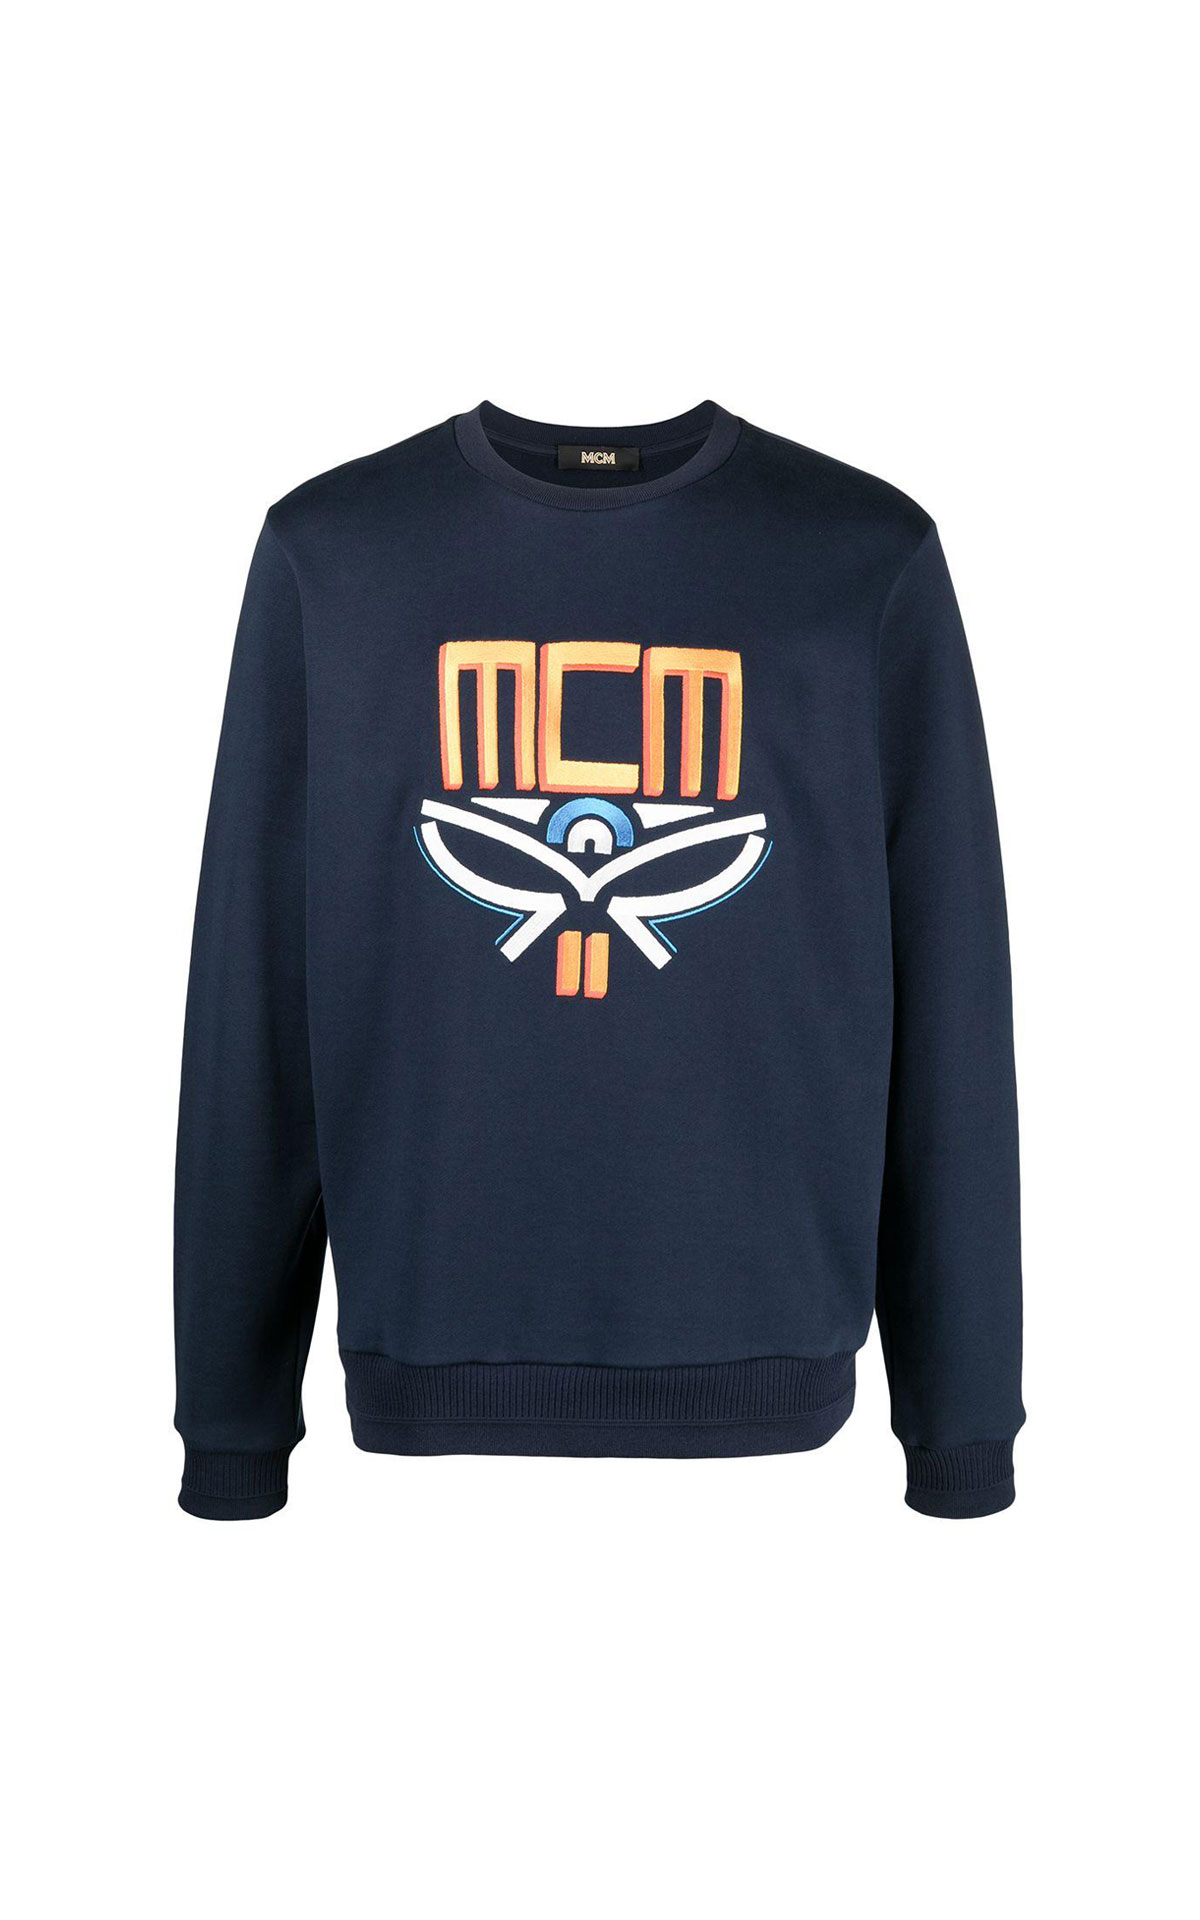 MCM MCM collection men's sweatshirt from Bicester Village